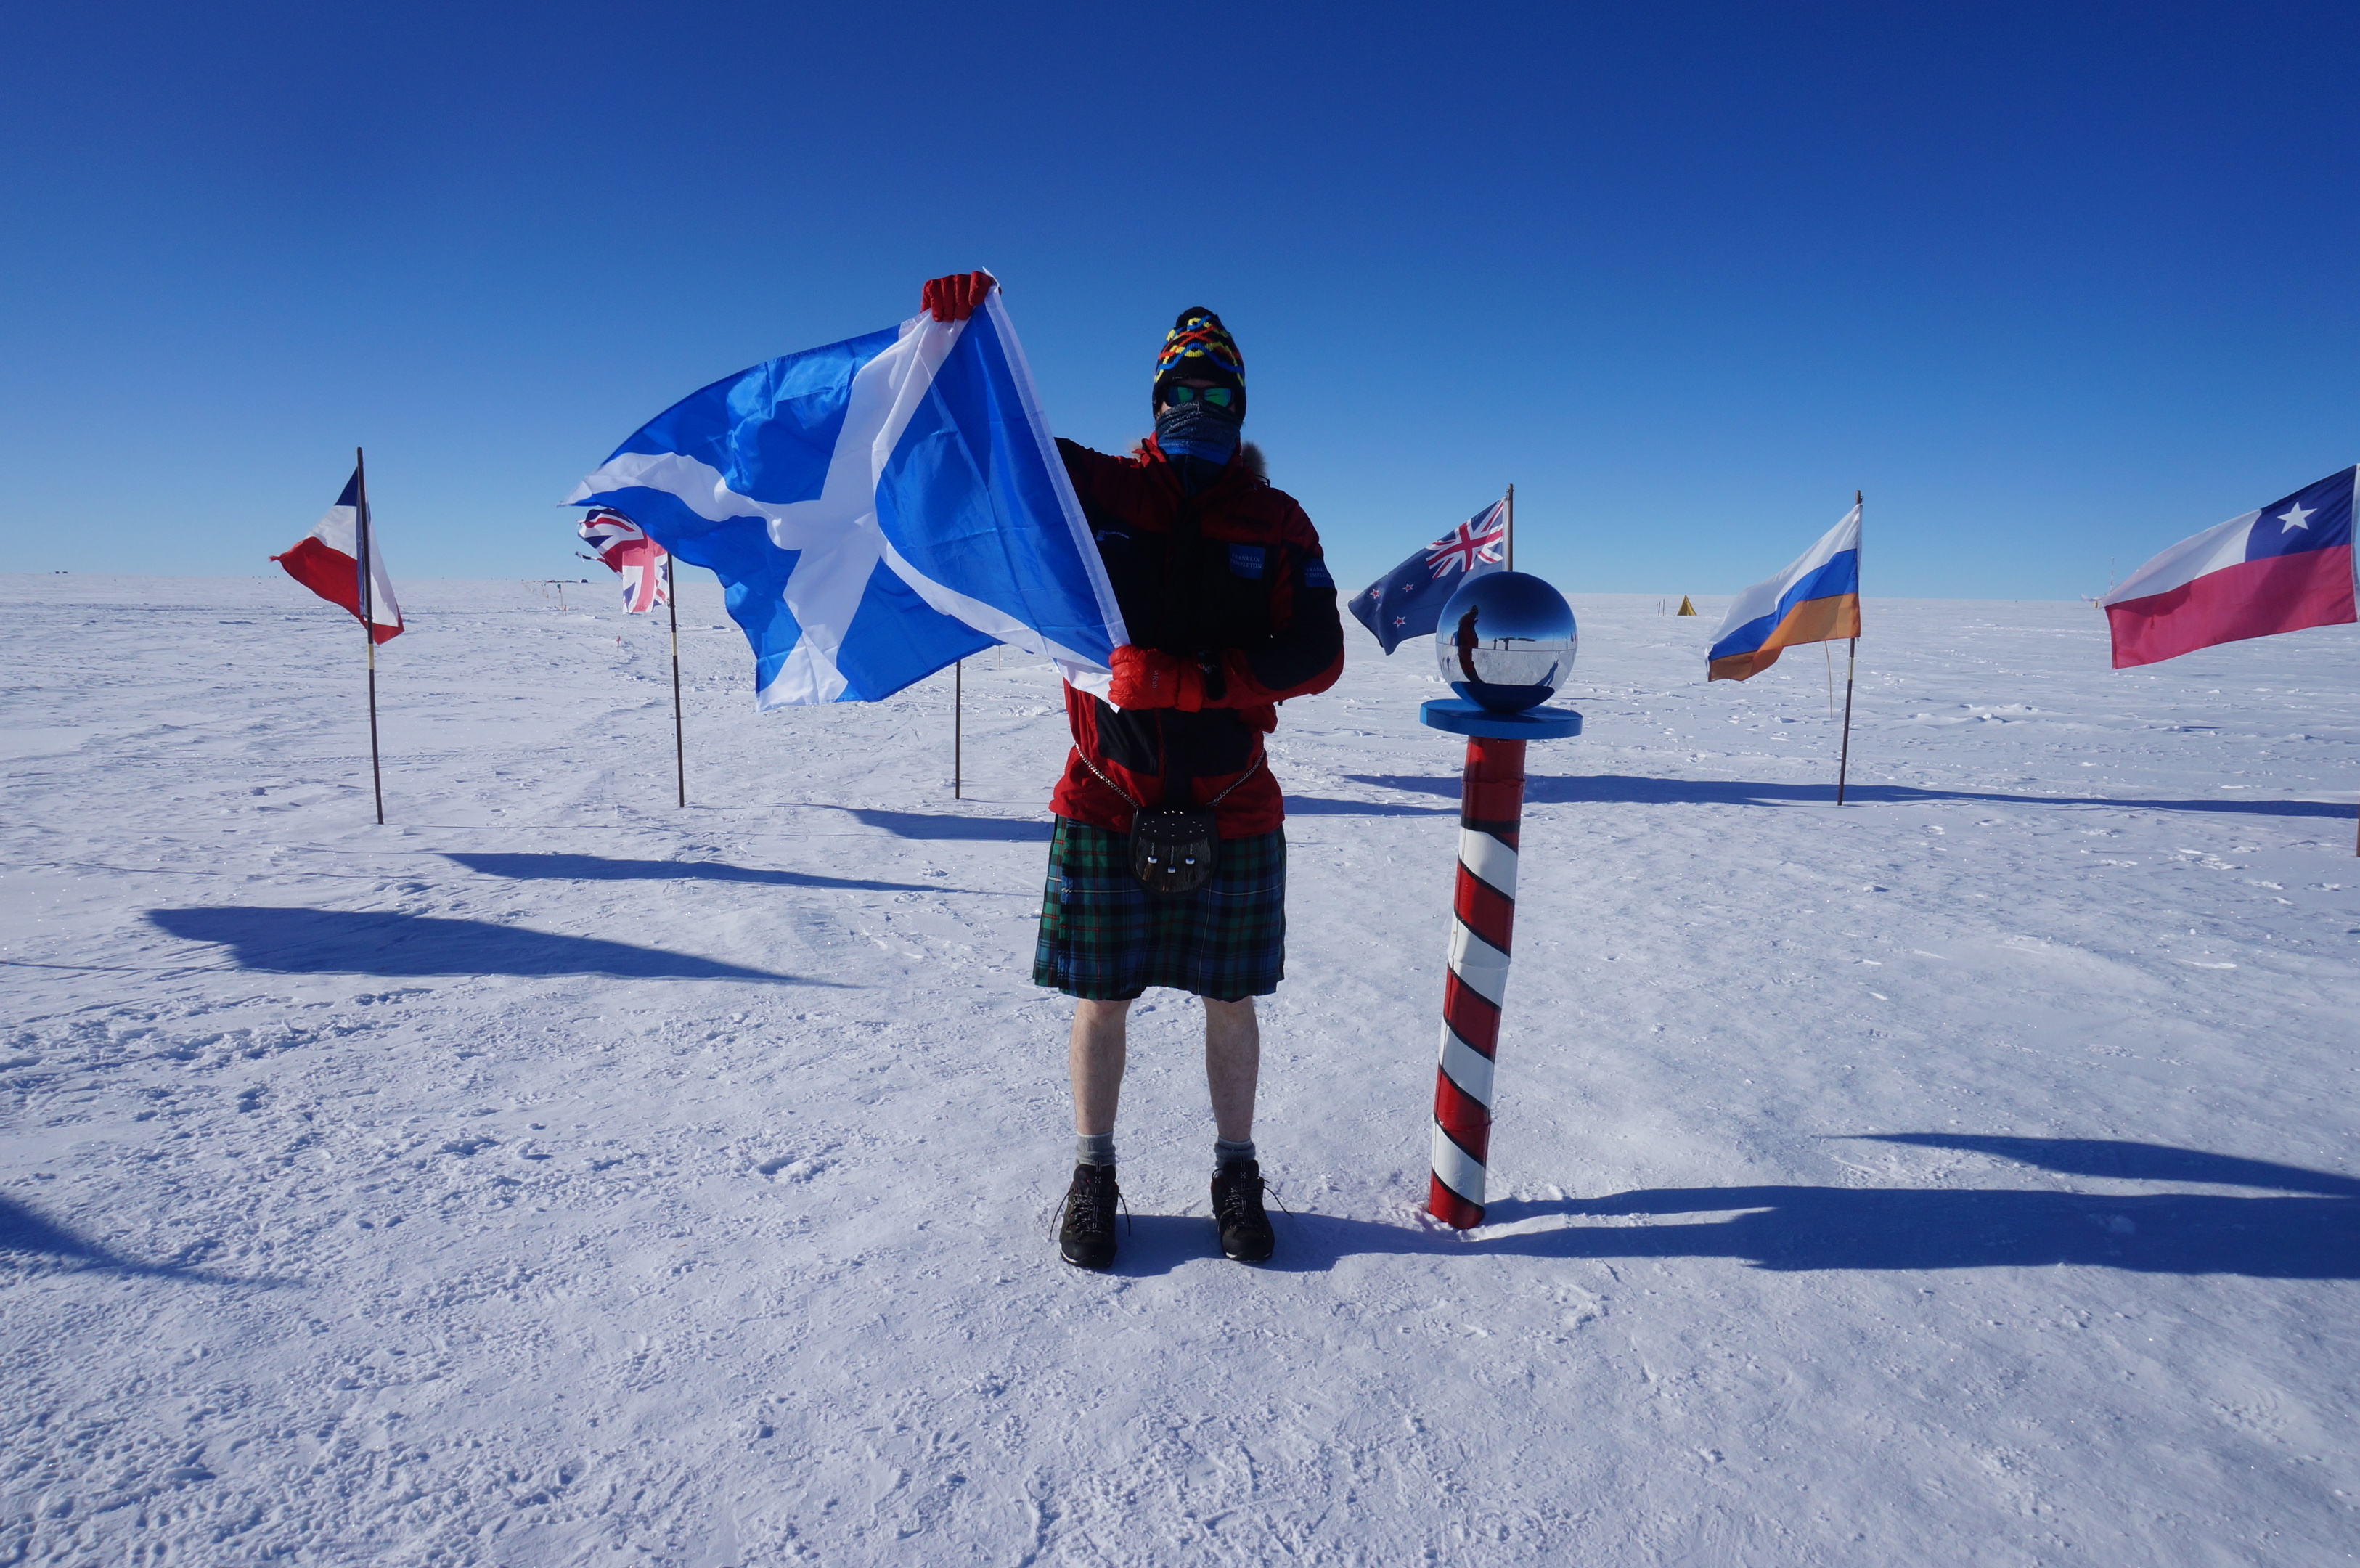 Luke Robertson at the South Pole